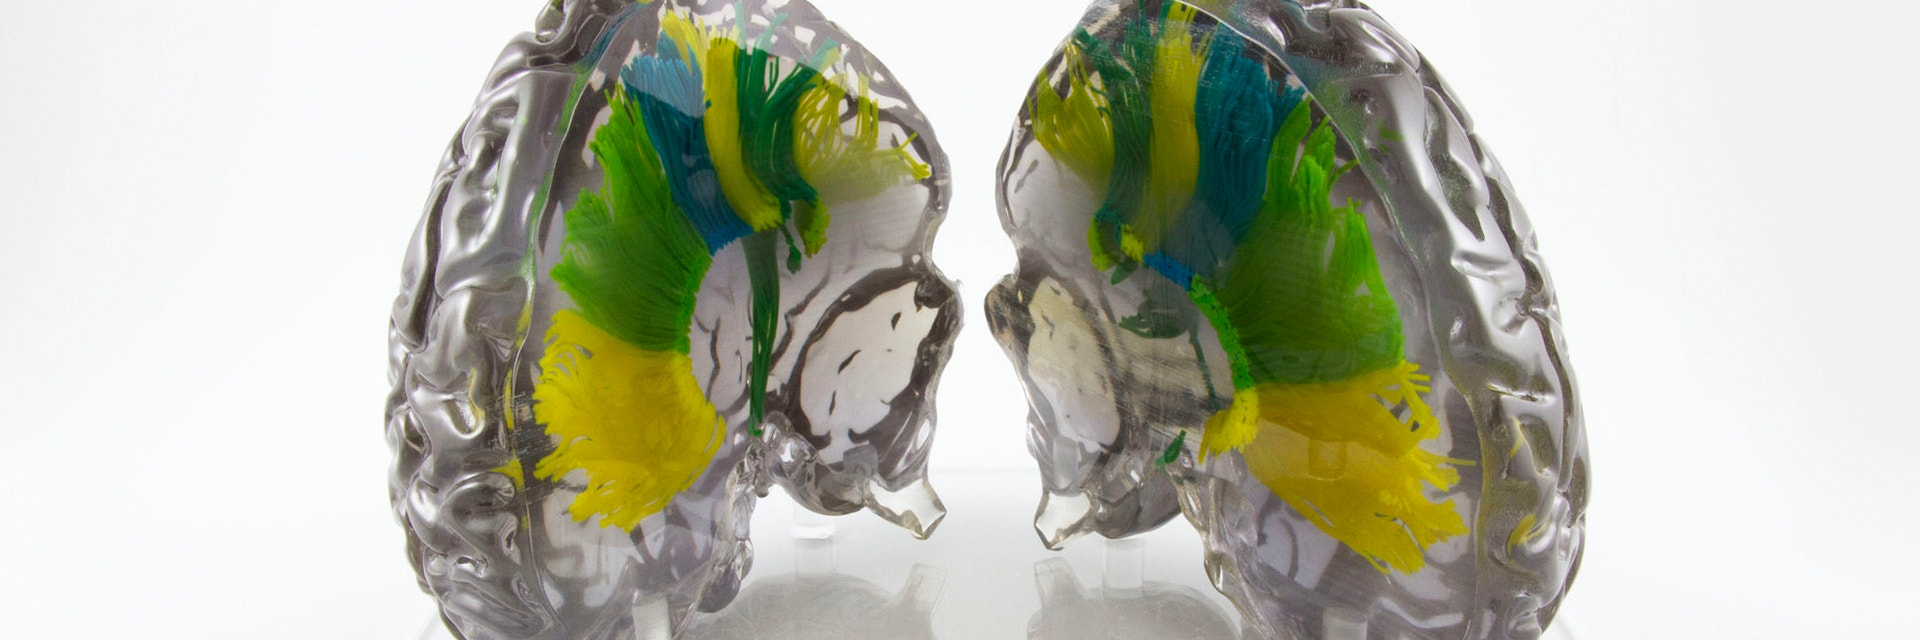 3D-printed anatomical model of human brain 